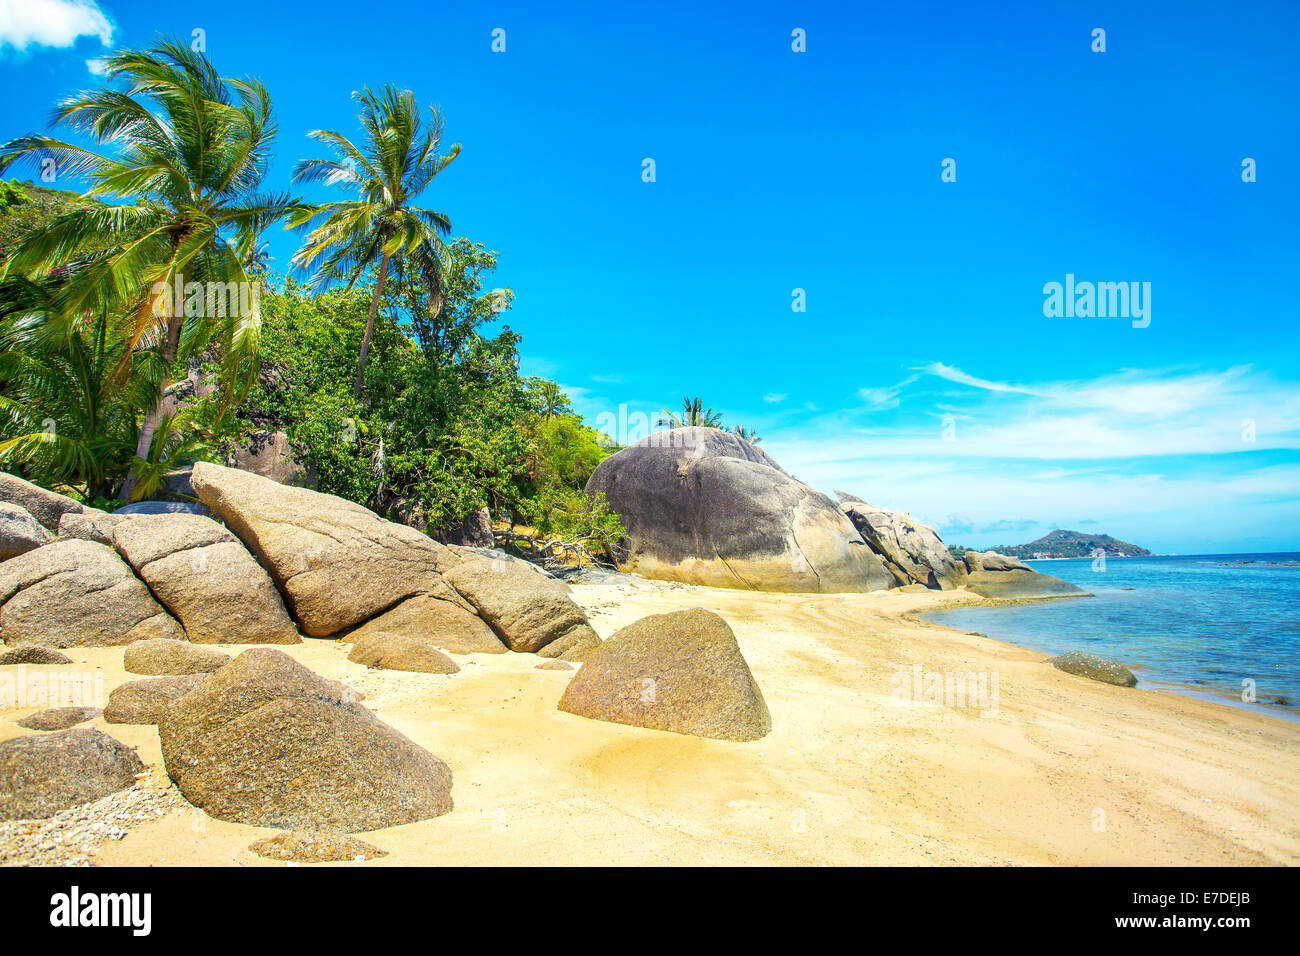 A beautiful tropical beach with palm trees at Koh Phangan island, Thailand Stock Photo